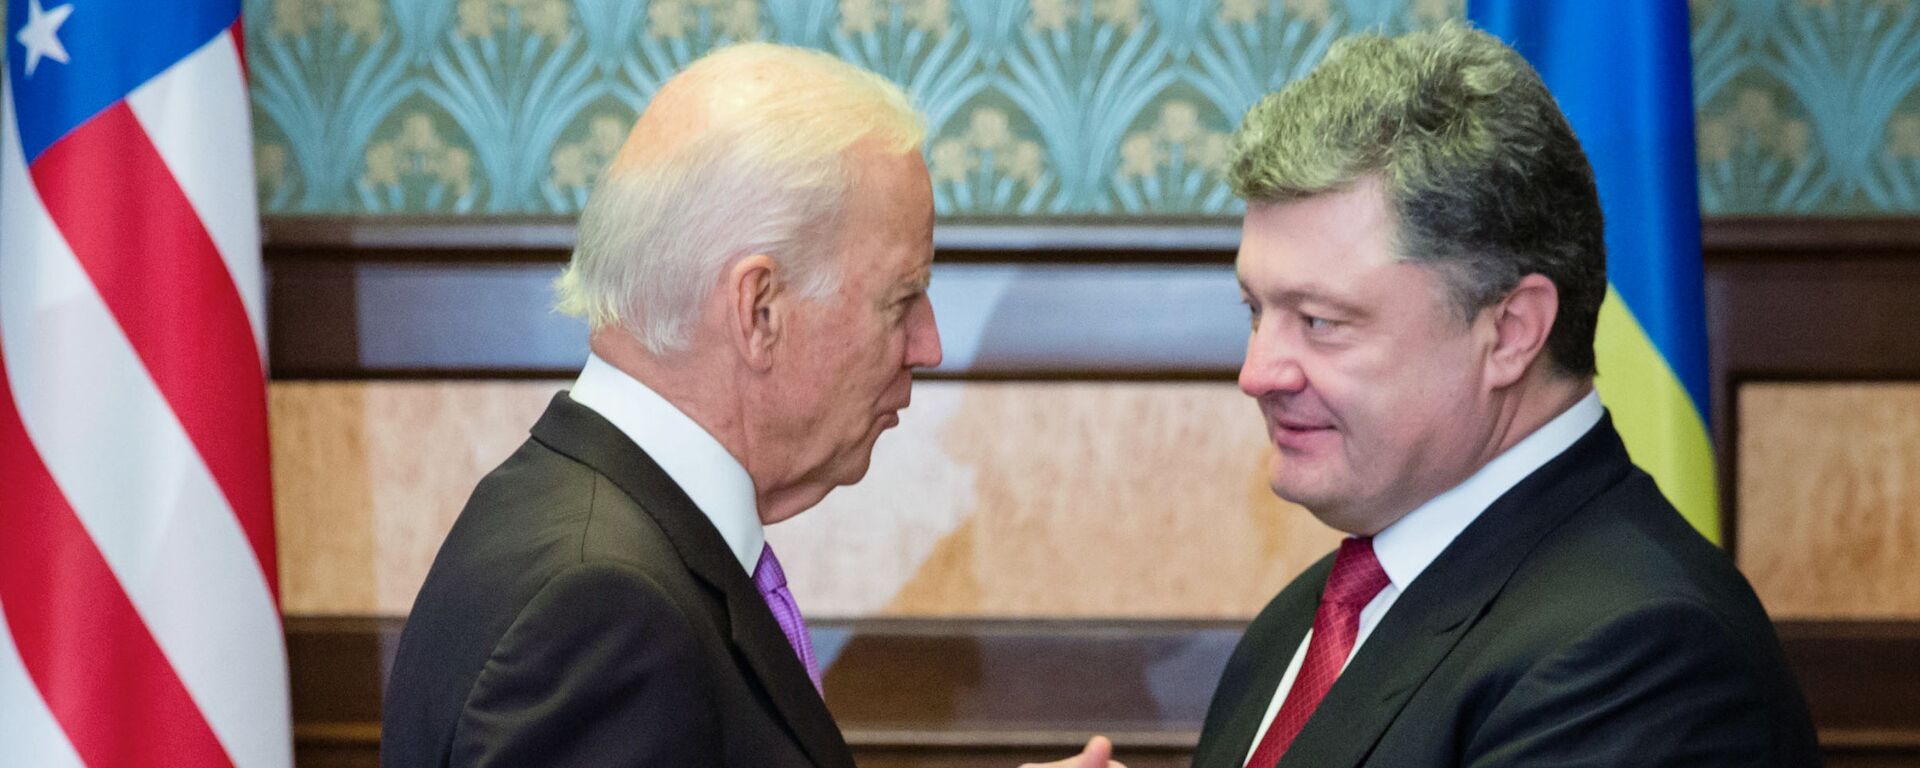 US Vice President Joe Biden (left) and Ukrainian President Petro Poroshenko during a meeting in Kiev - Sputnik International, 1920, 17.08.2020